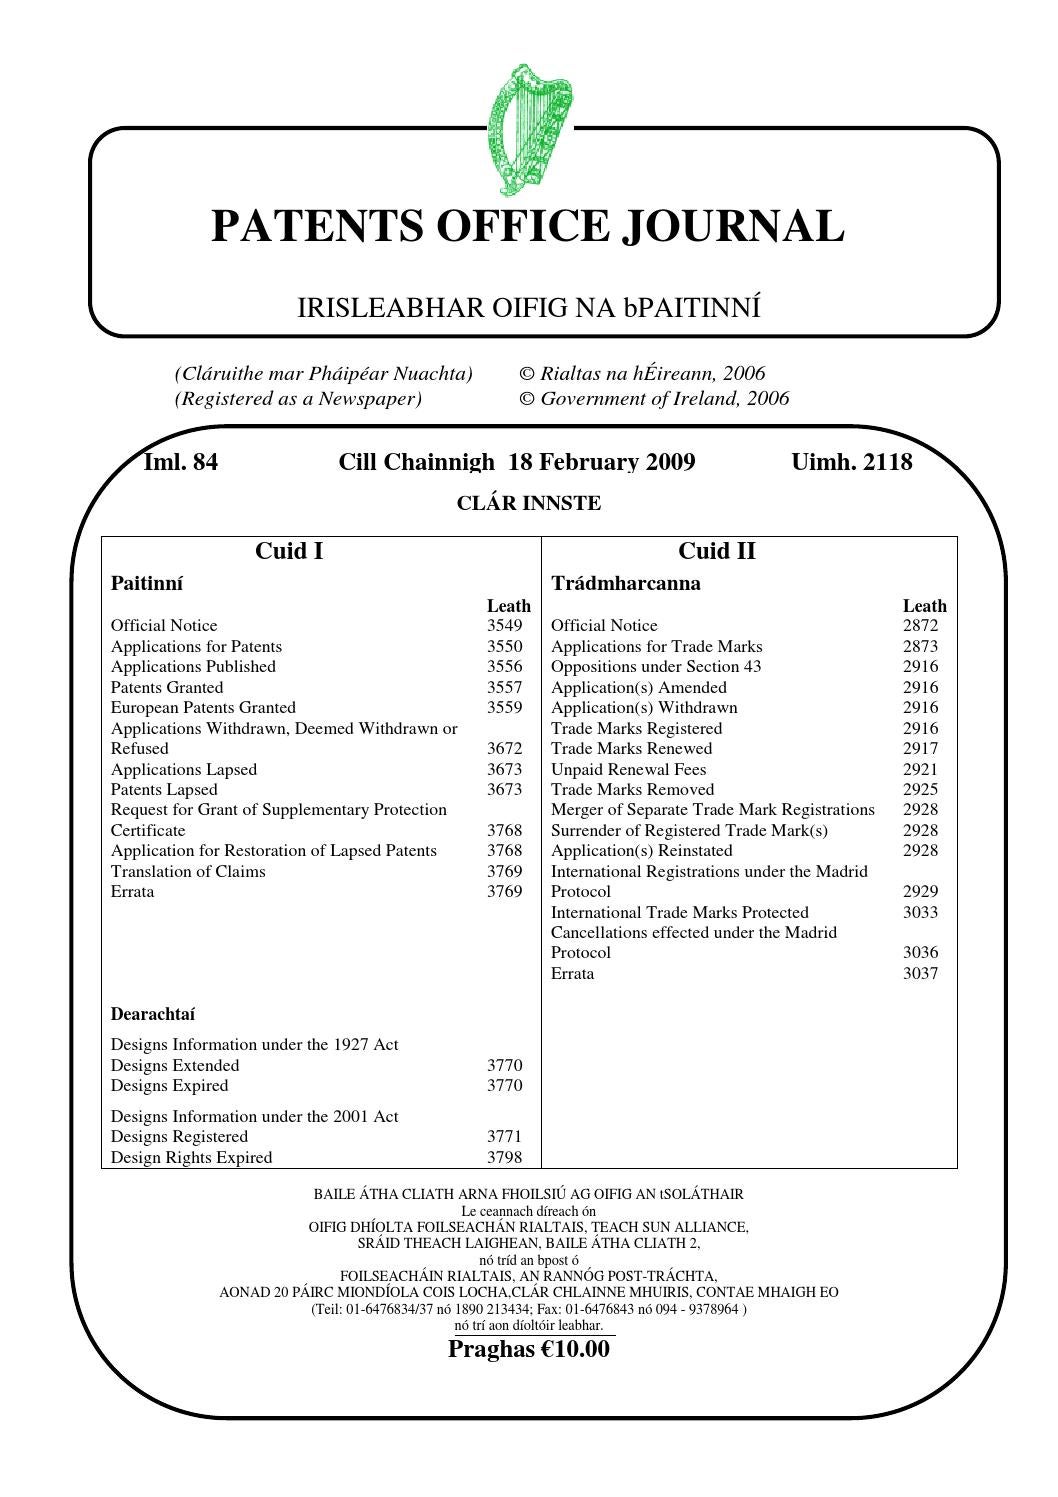 japanese patent application renewal fees